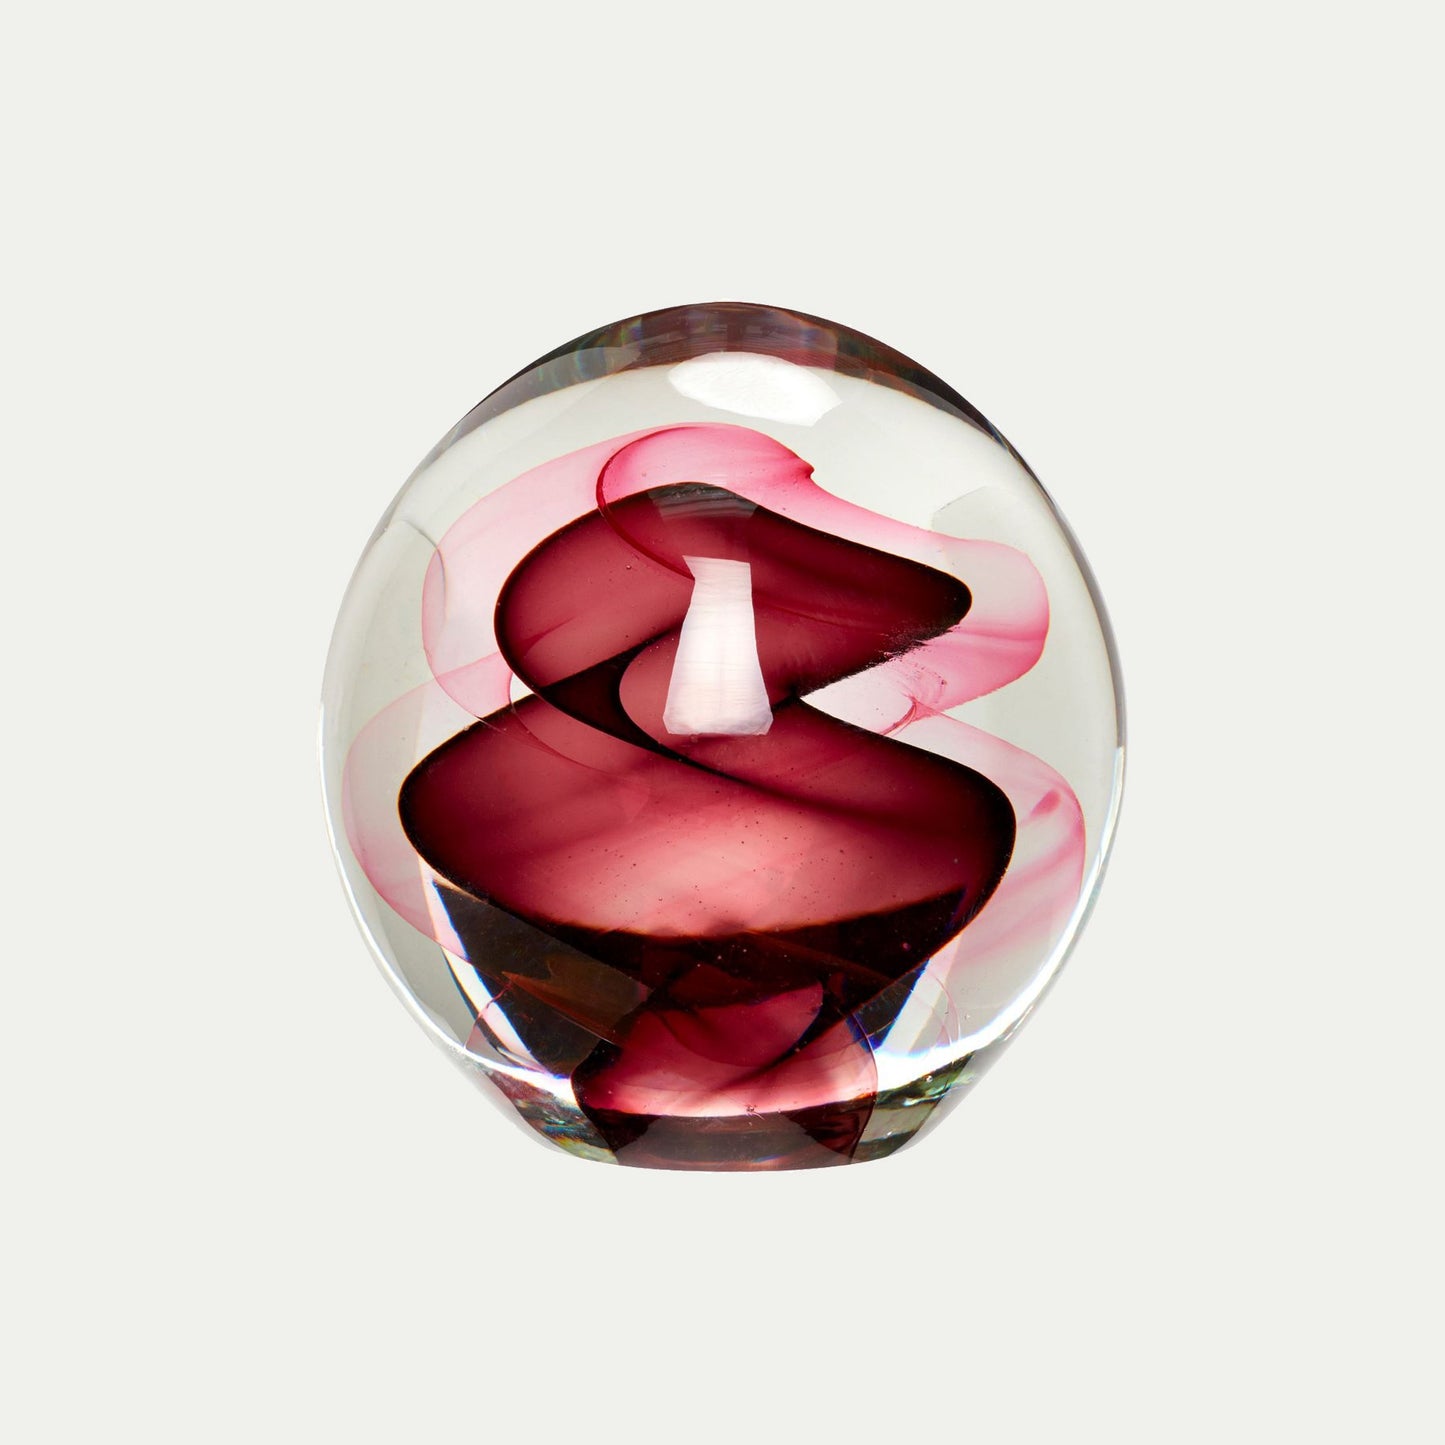 Hubsch Interior objet d’art paperweight in burgundy red and pink swirl pattern on white background